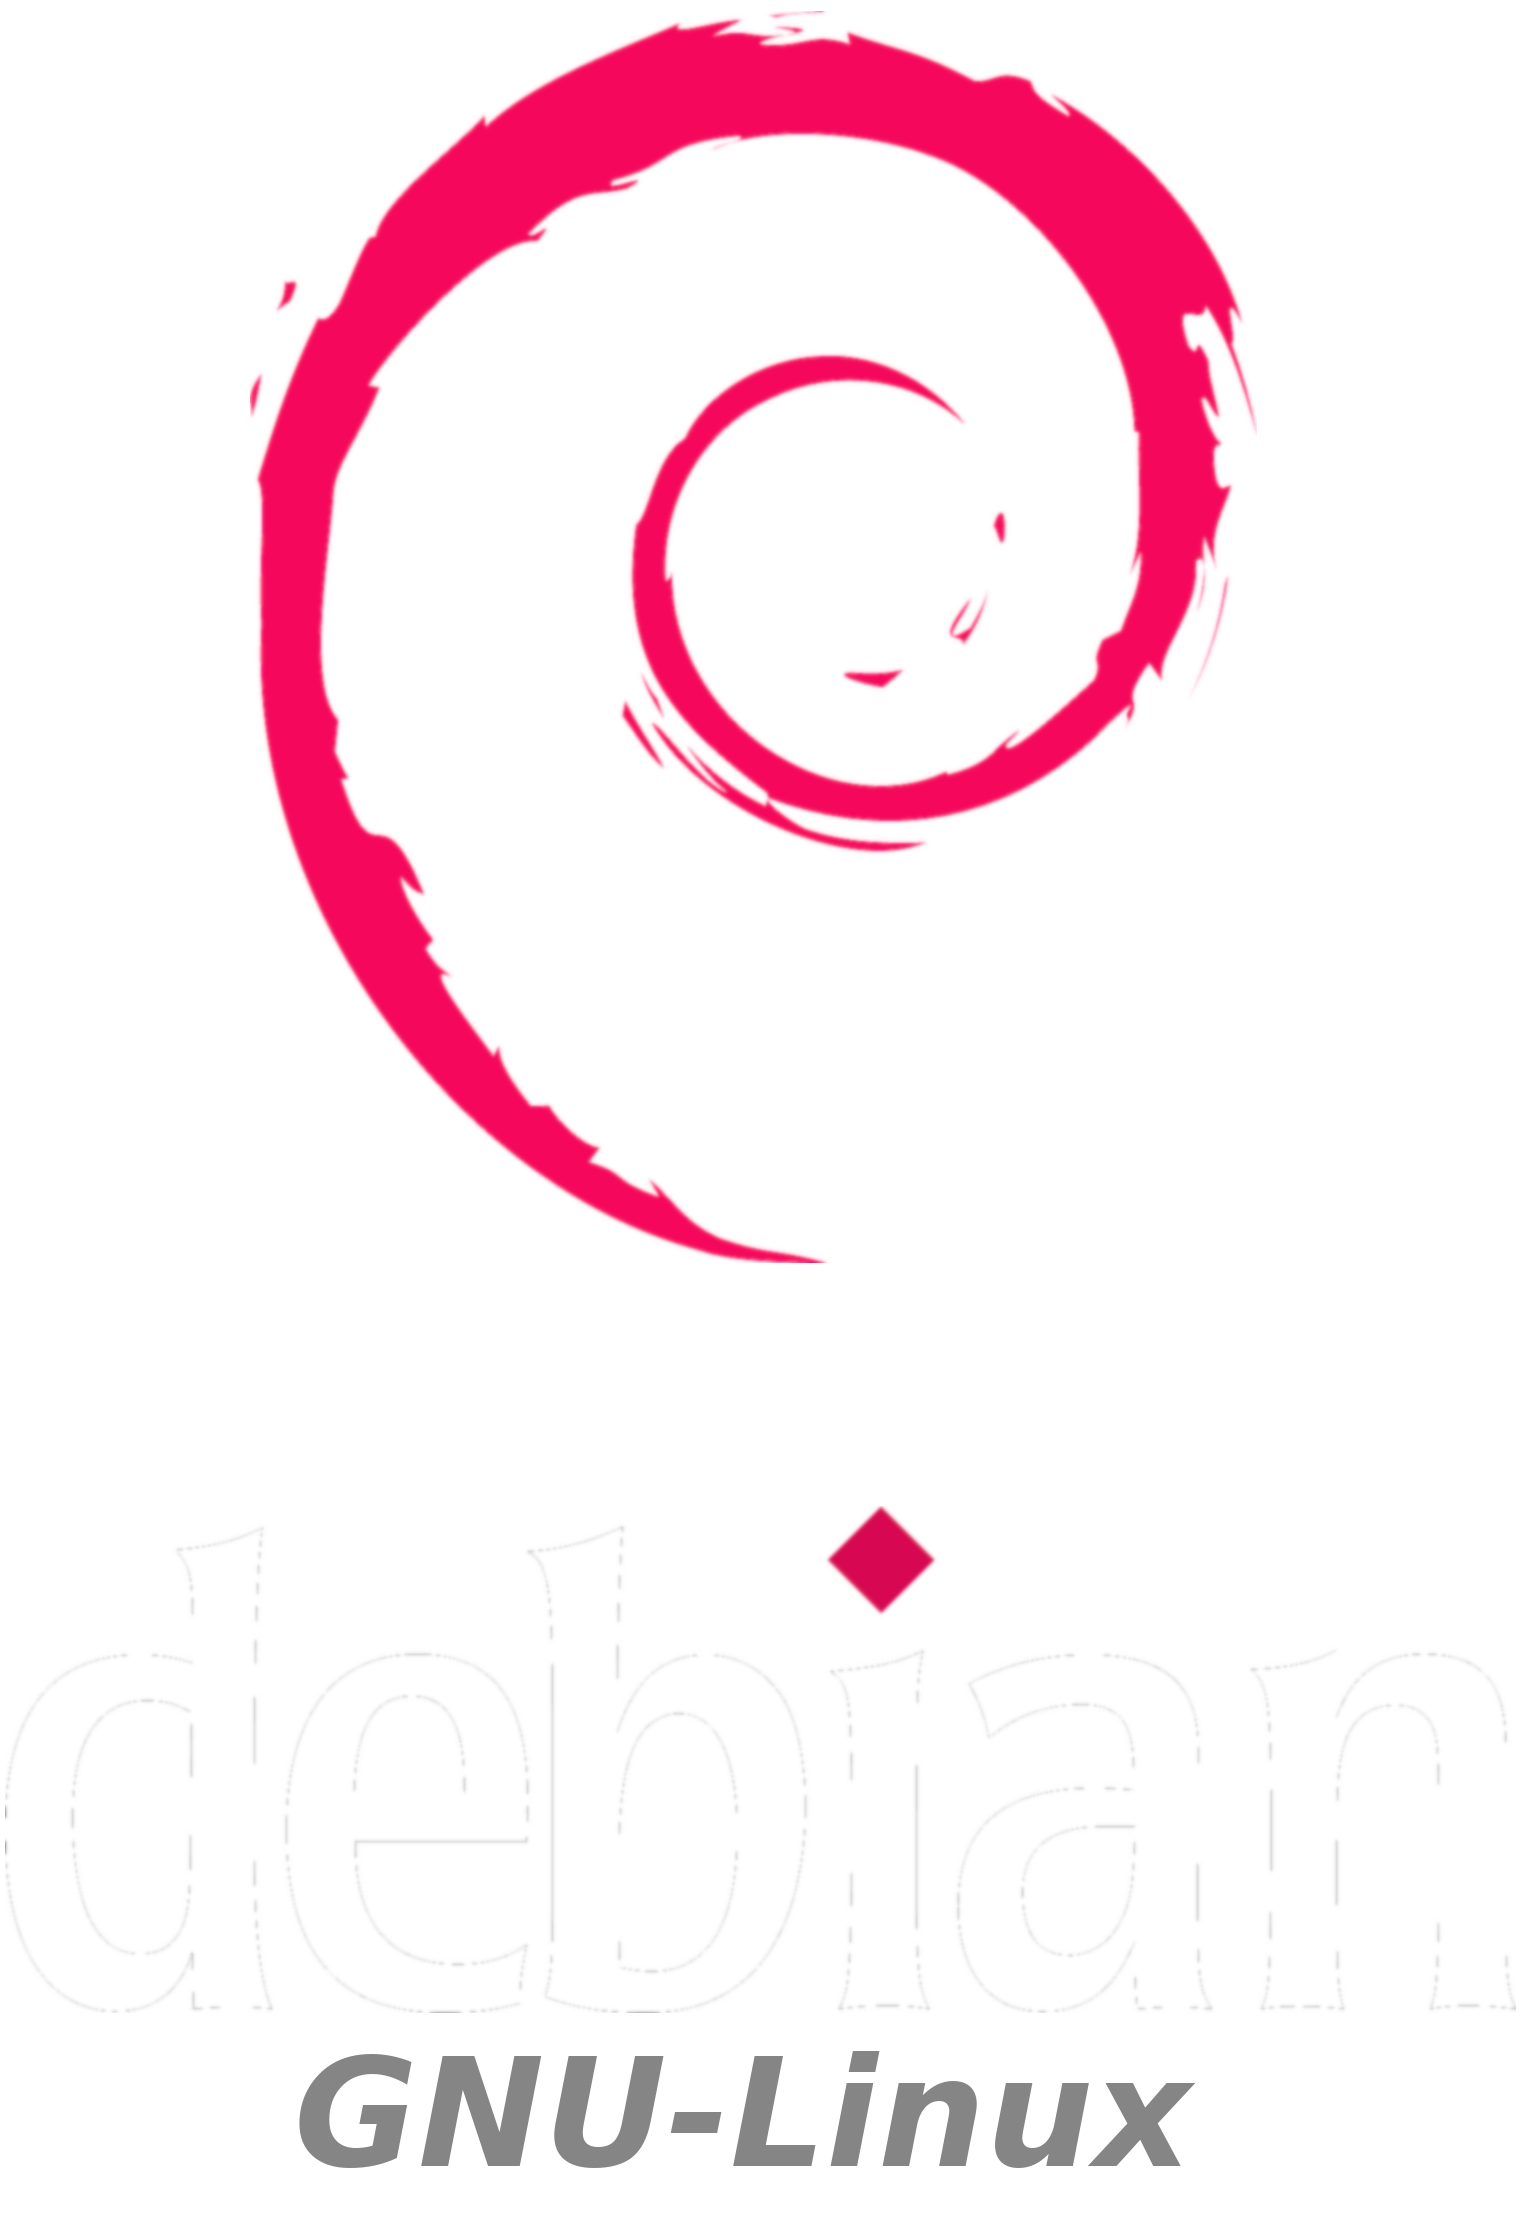 GNU Linux Debian – bash – setup and optimize “install_basics.sh” script